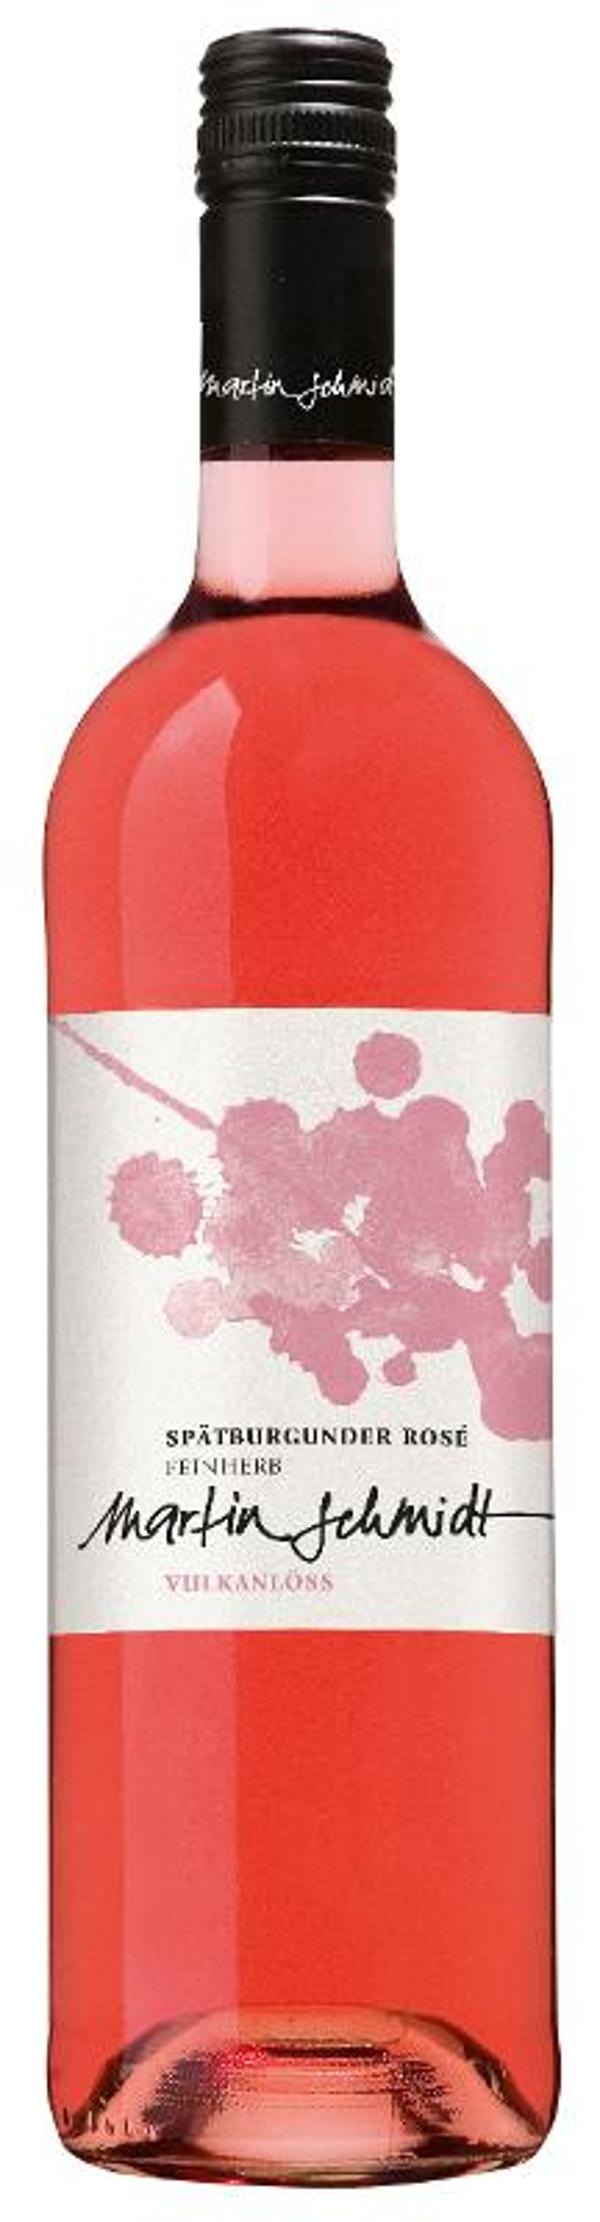 Produktfoto zu Vulkanlöss Spätburgunder rosè feinherb 0,75